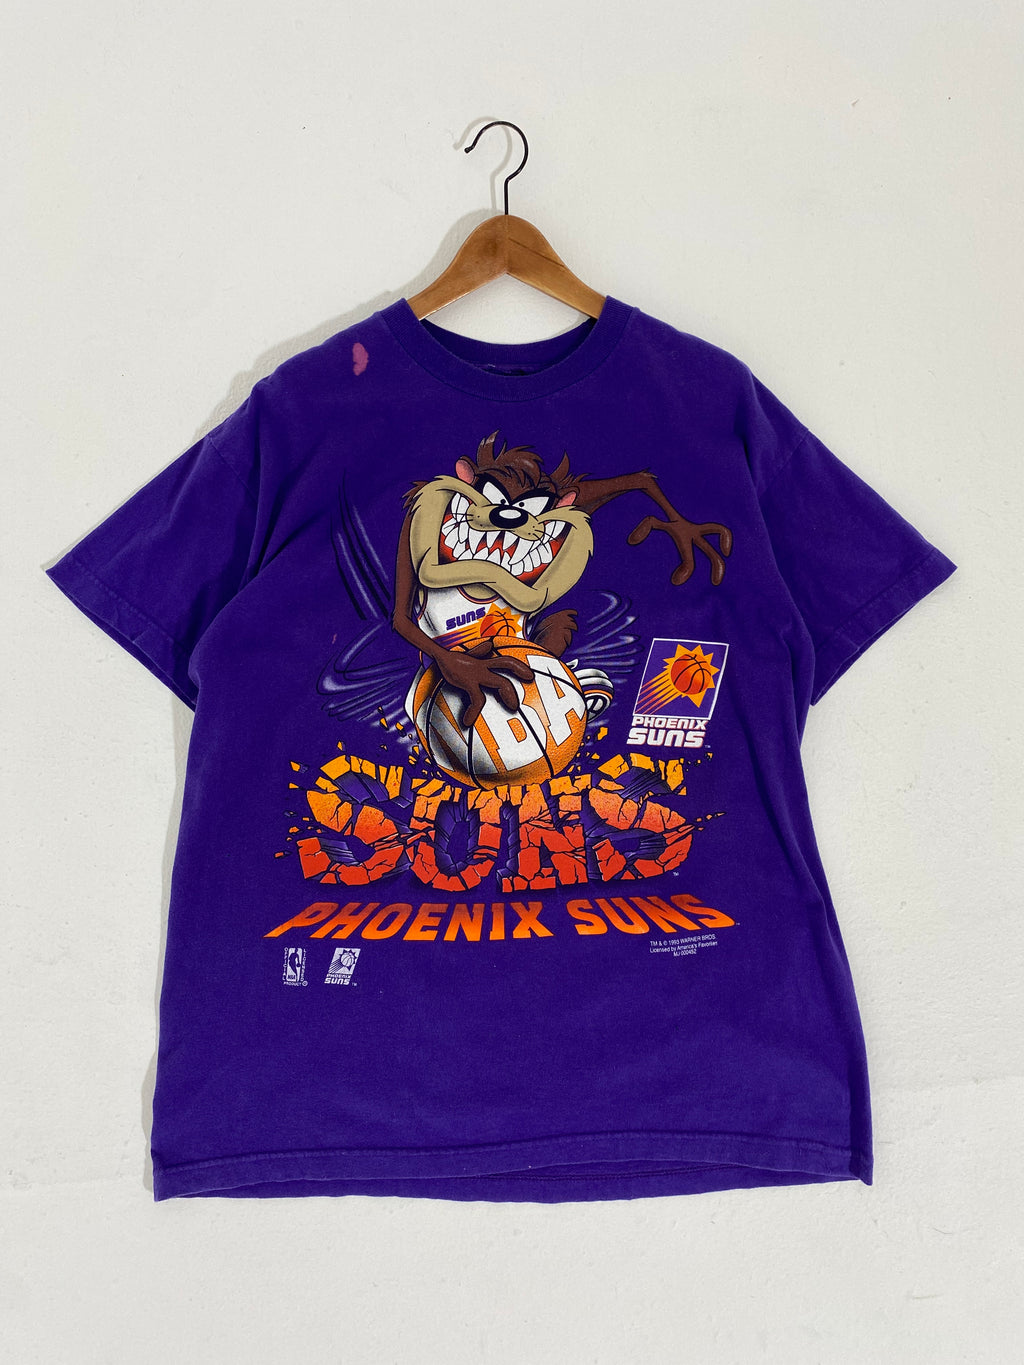 AzThread - Vintage Phoenix suns looney tunes shirt size large for